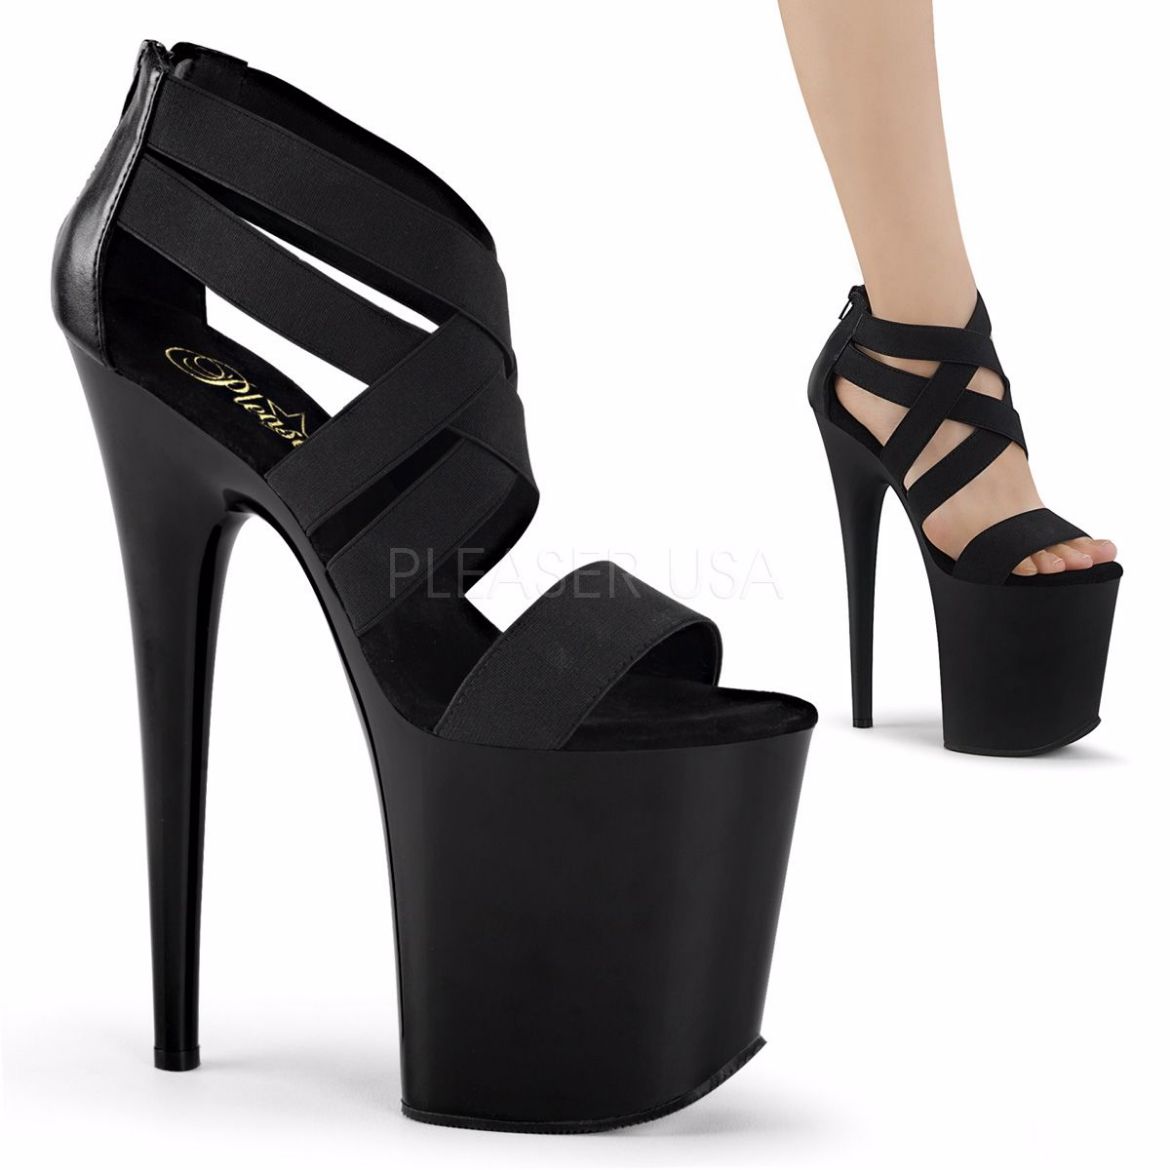 Product image of Pleaser Flamingo-869 Black Elastic Band-Faux Leather/Black Matte, 8 inch (20.3 cm) Heel, 4 inch (10.2 cm) Platform Sandal Shoes